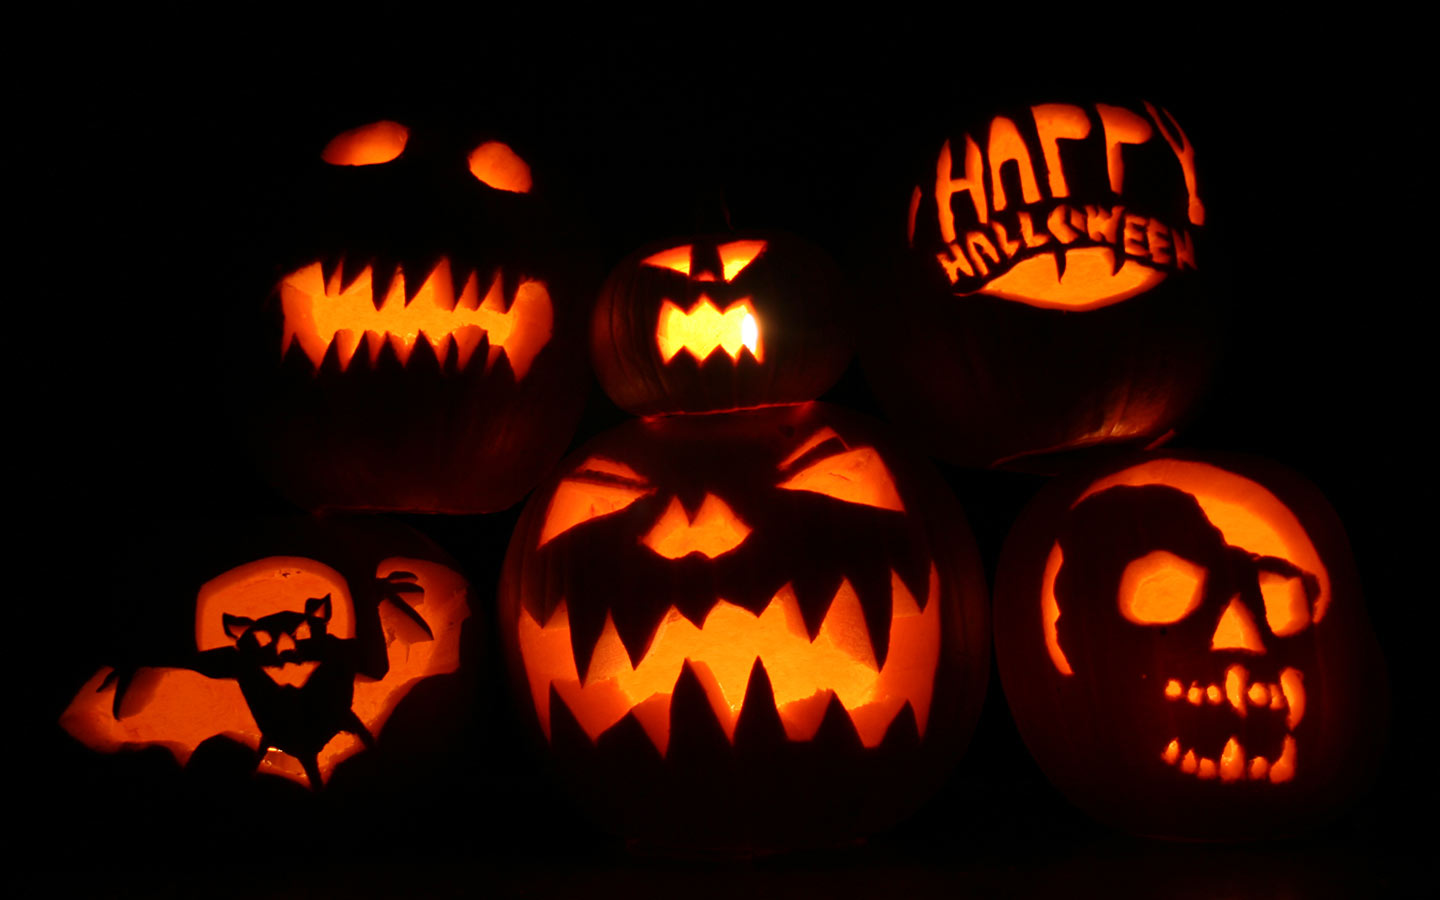 Festa de Halloween !!! Comidas totalmente com temas de terror